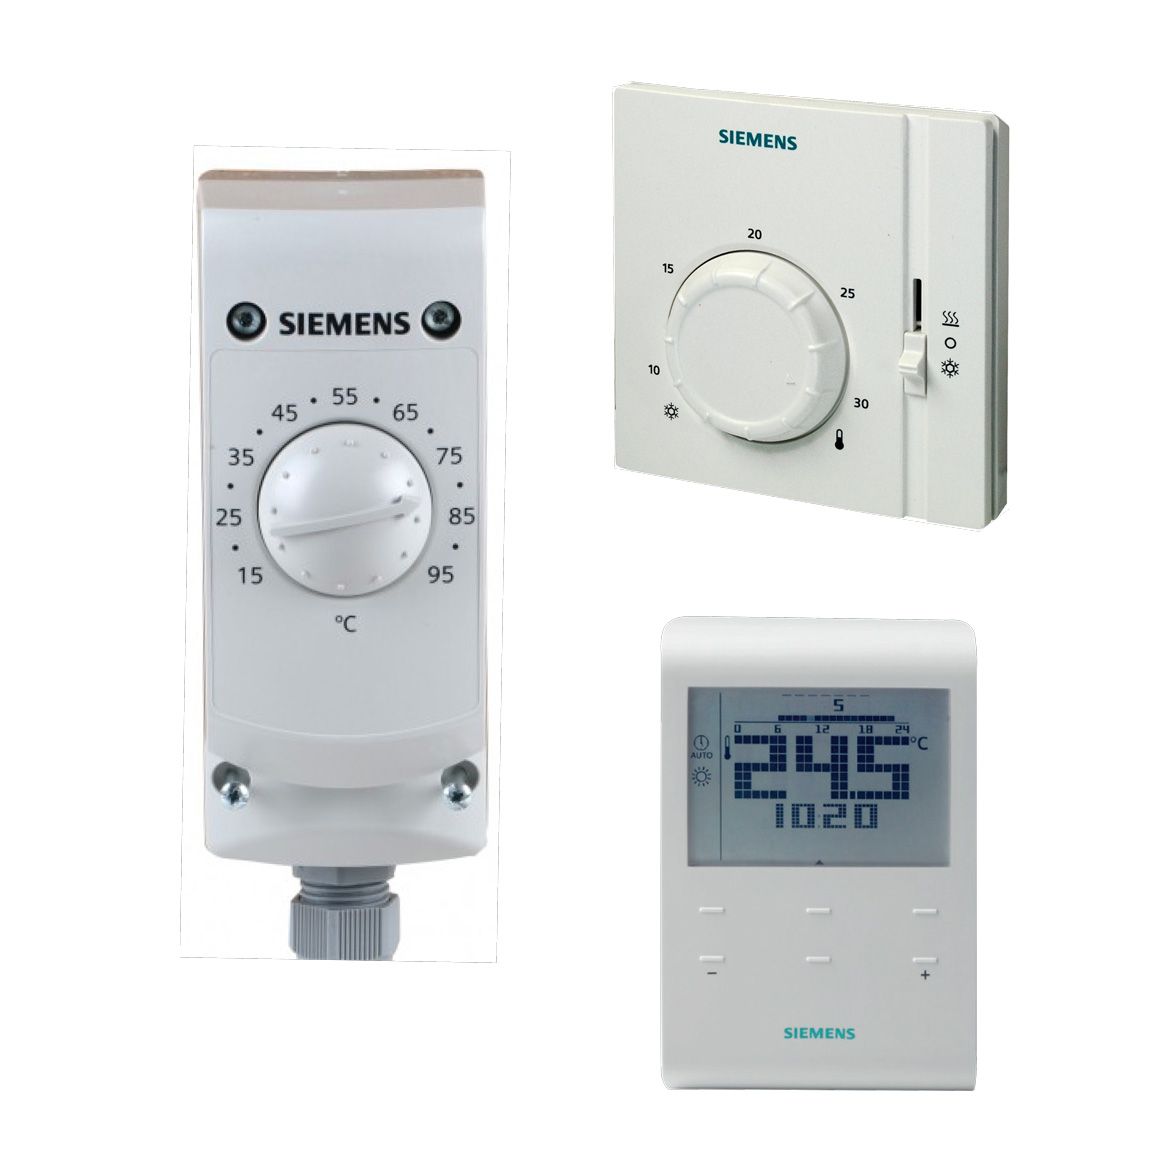 Siemens Thermostats & Controls